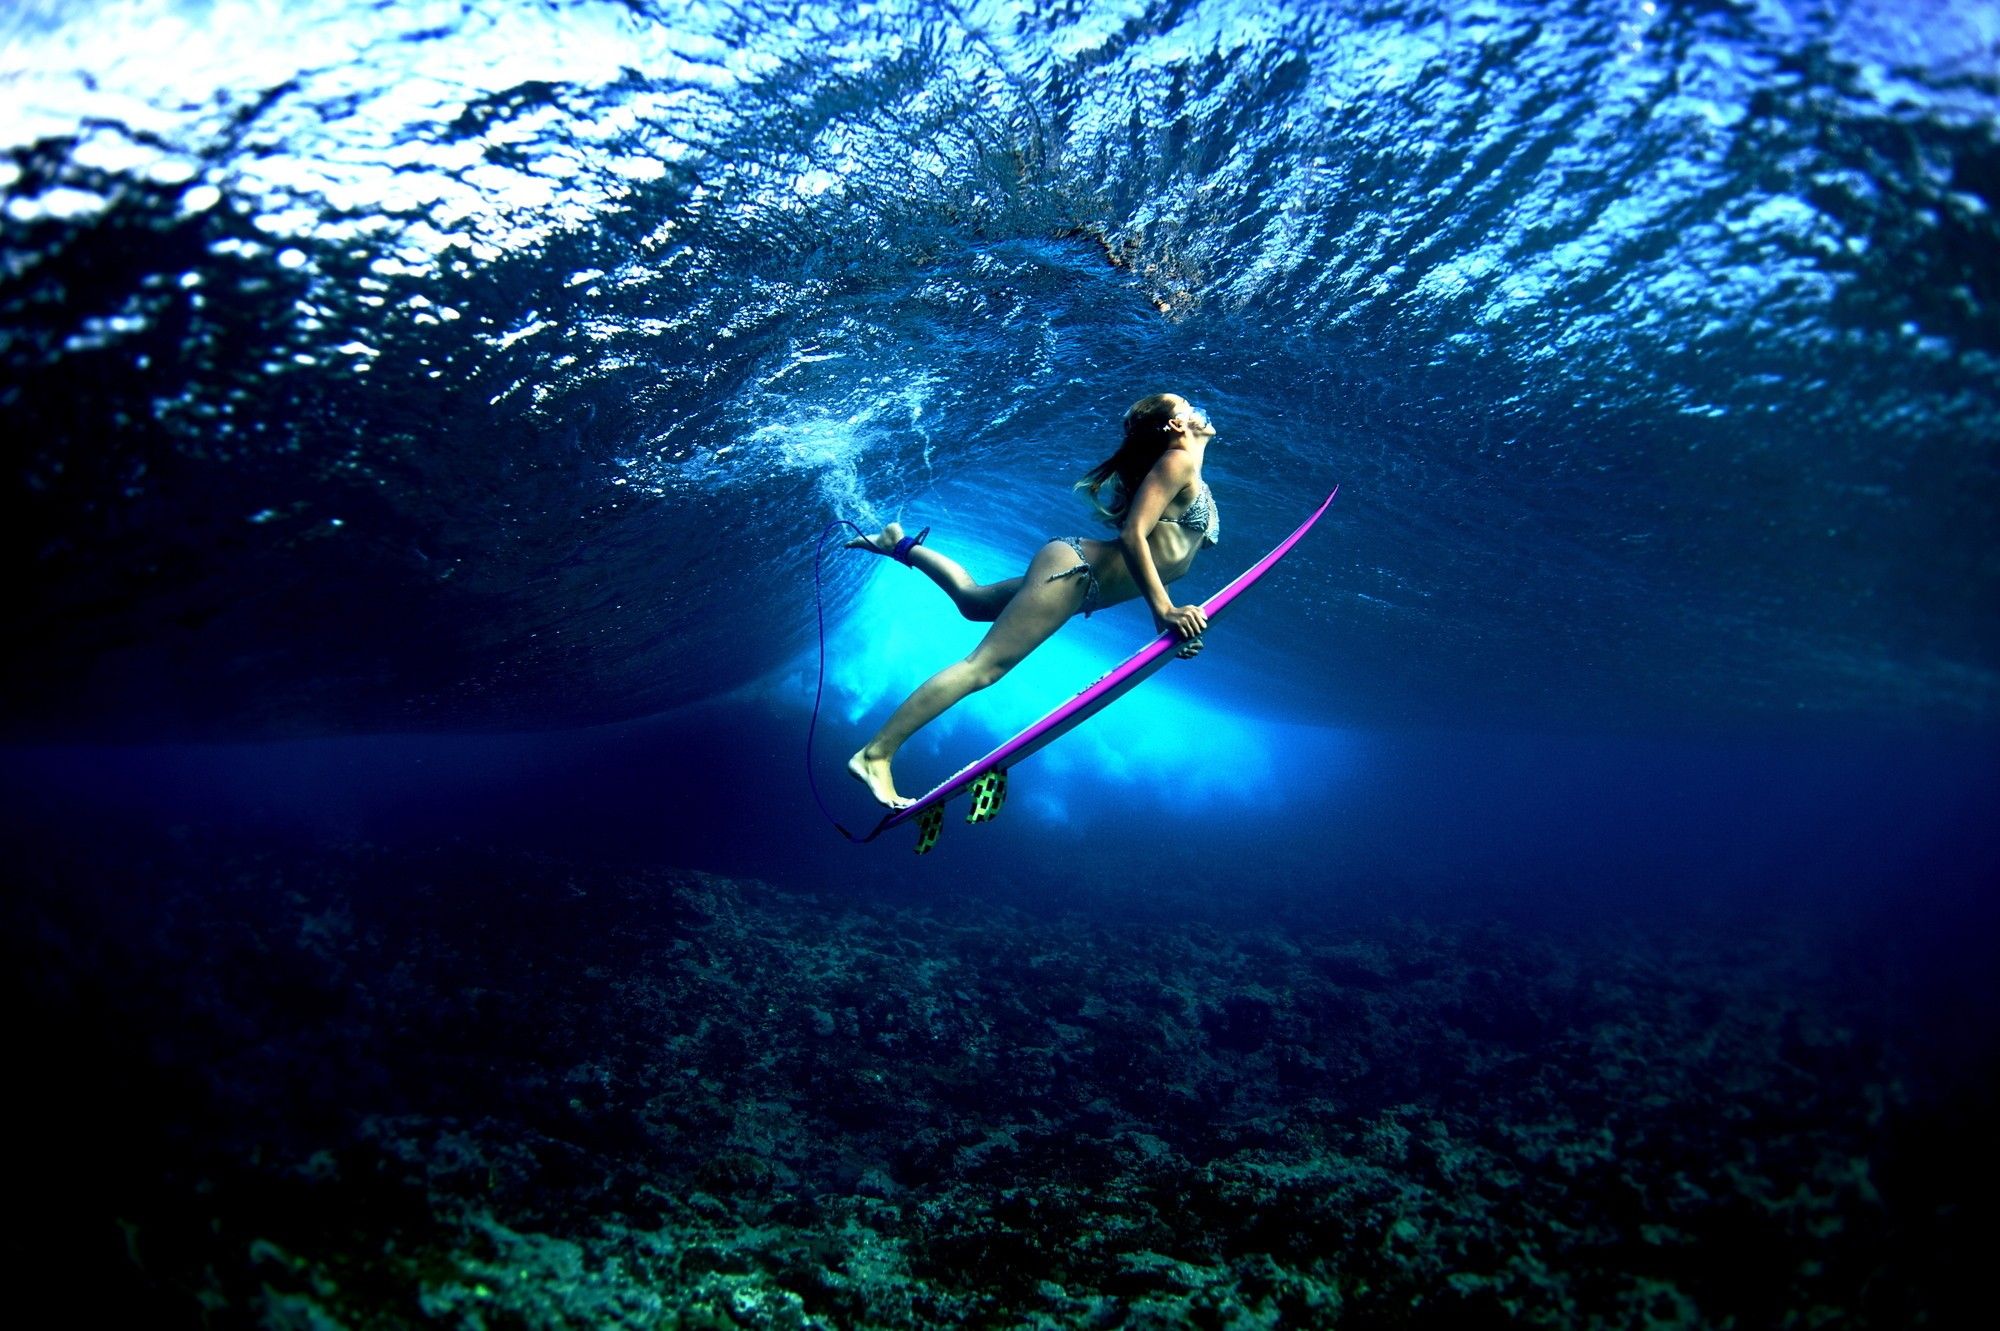 #surfers, #waves, #underwater, #surfboards, #women, #water